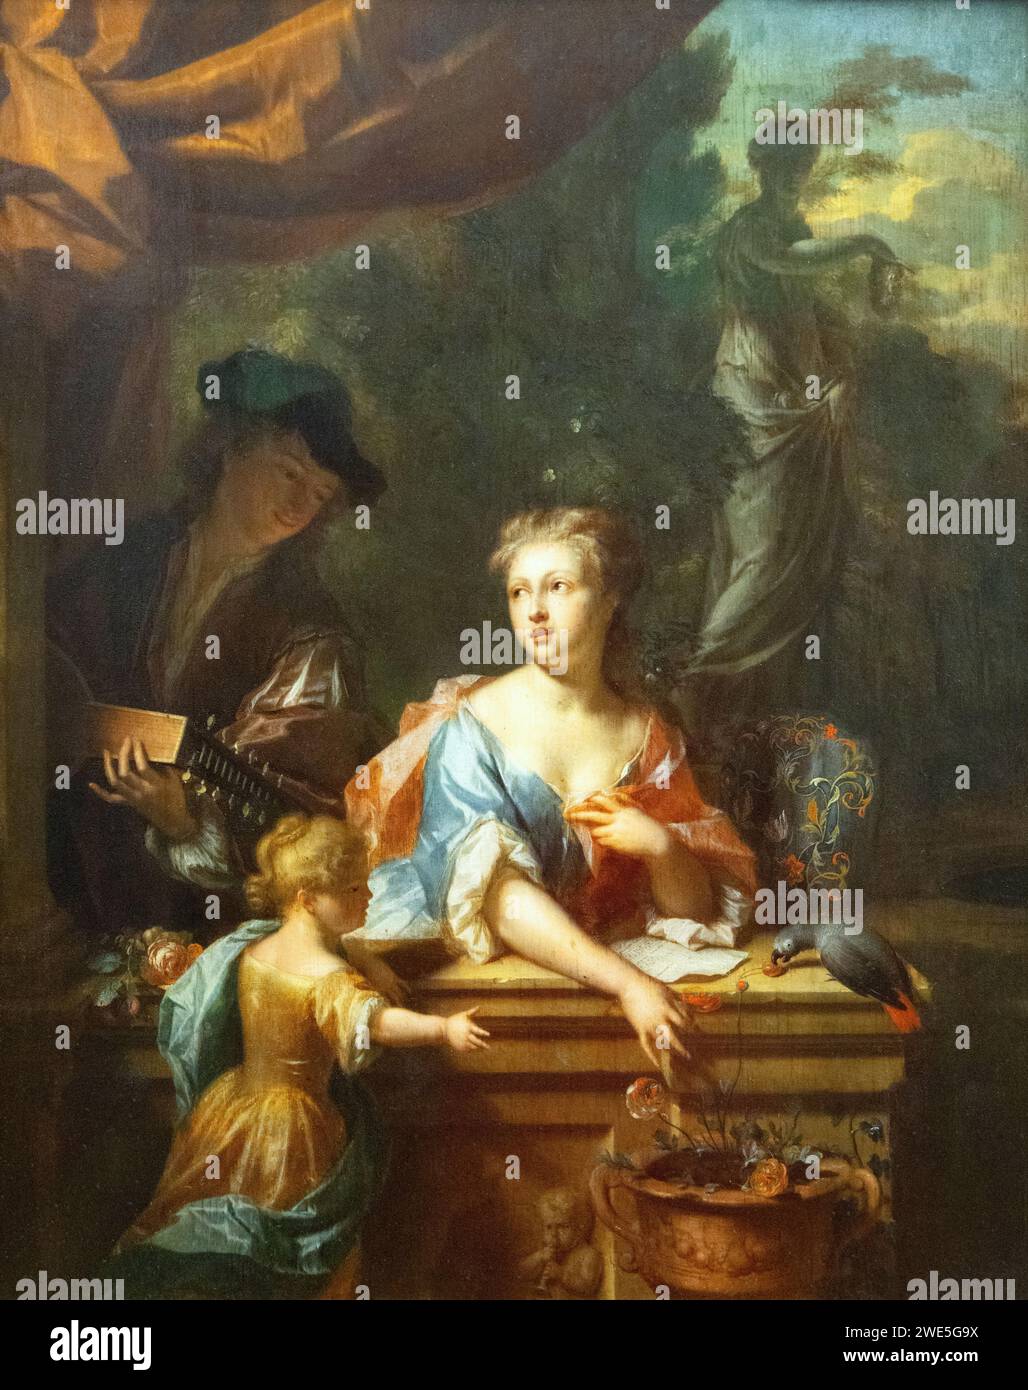 Philip van Dijk painting, The Luteplayer, 1727. 18th century Dutch Baroque period painter Stock Photo